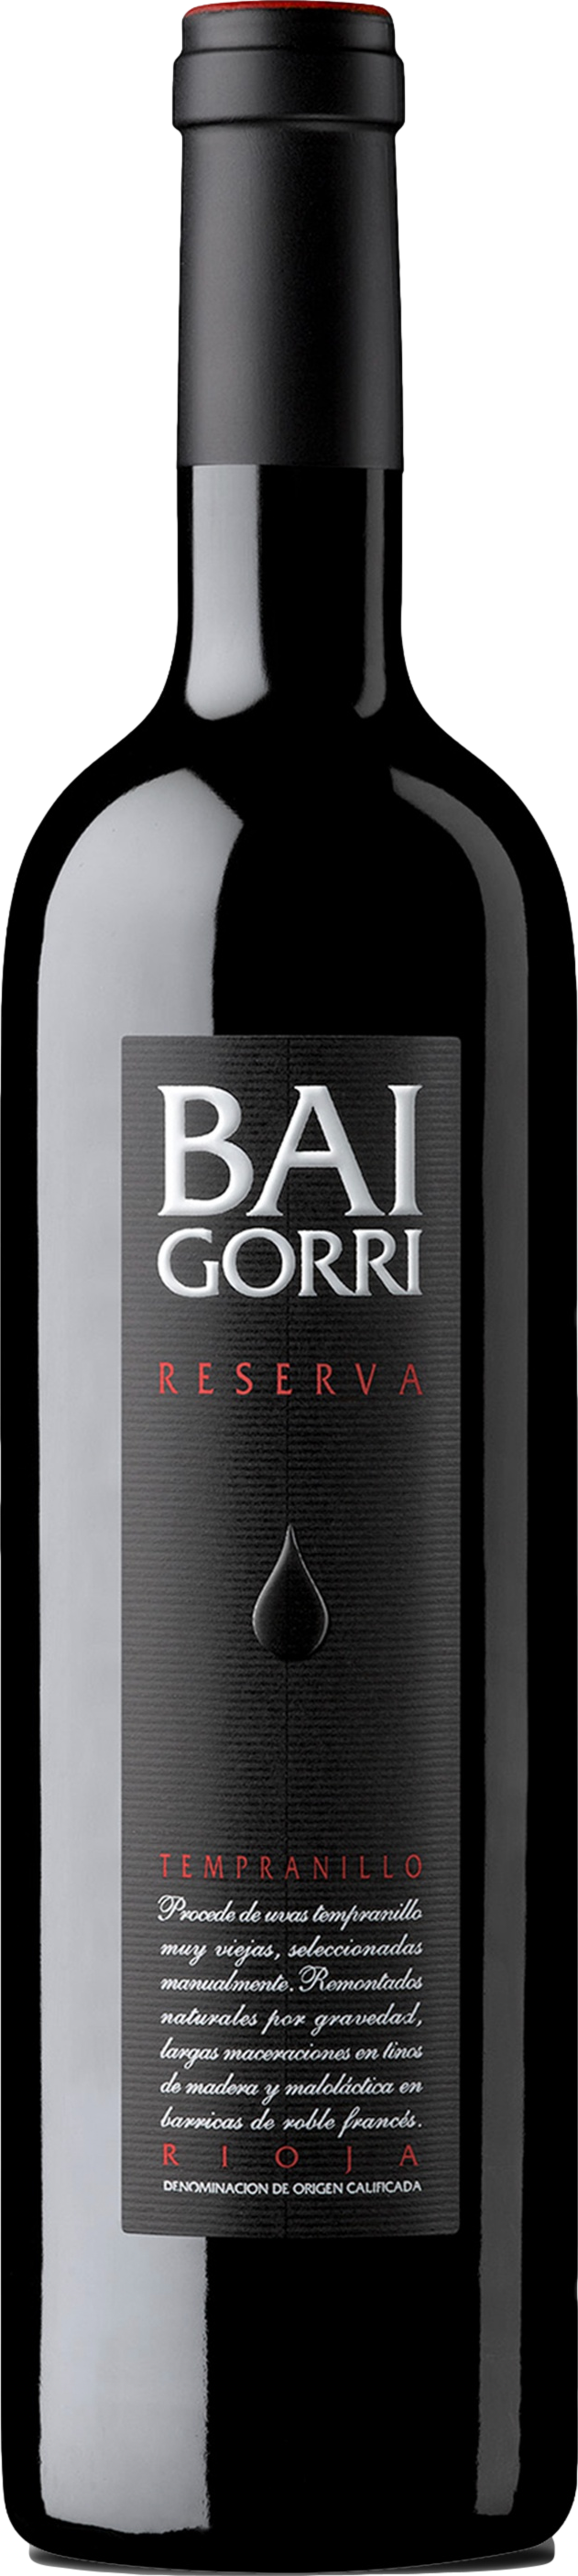 Baigorri Reserva Rioja 2017